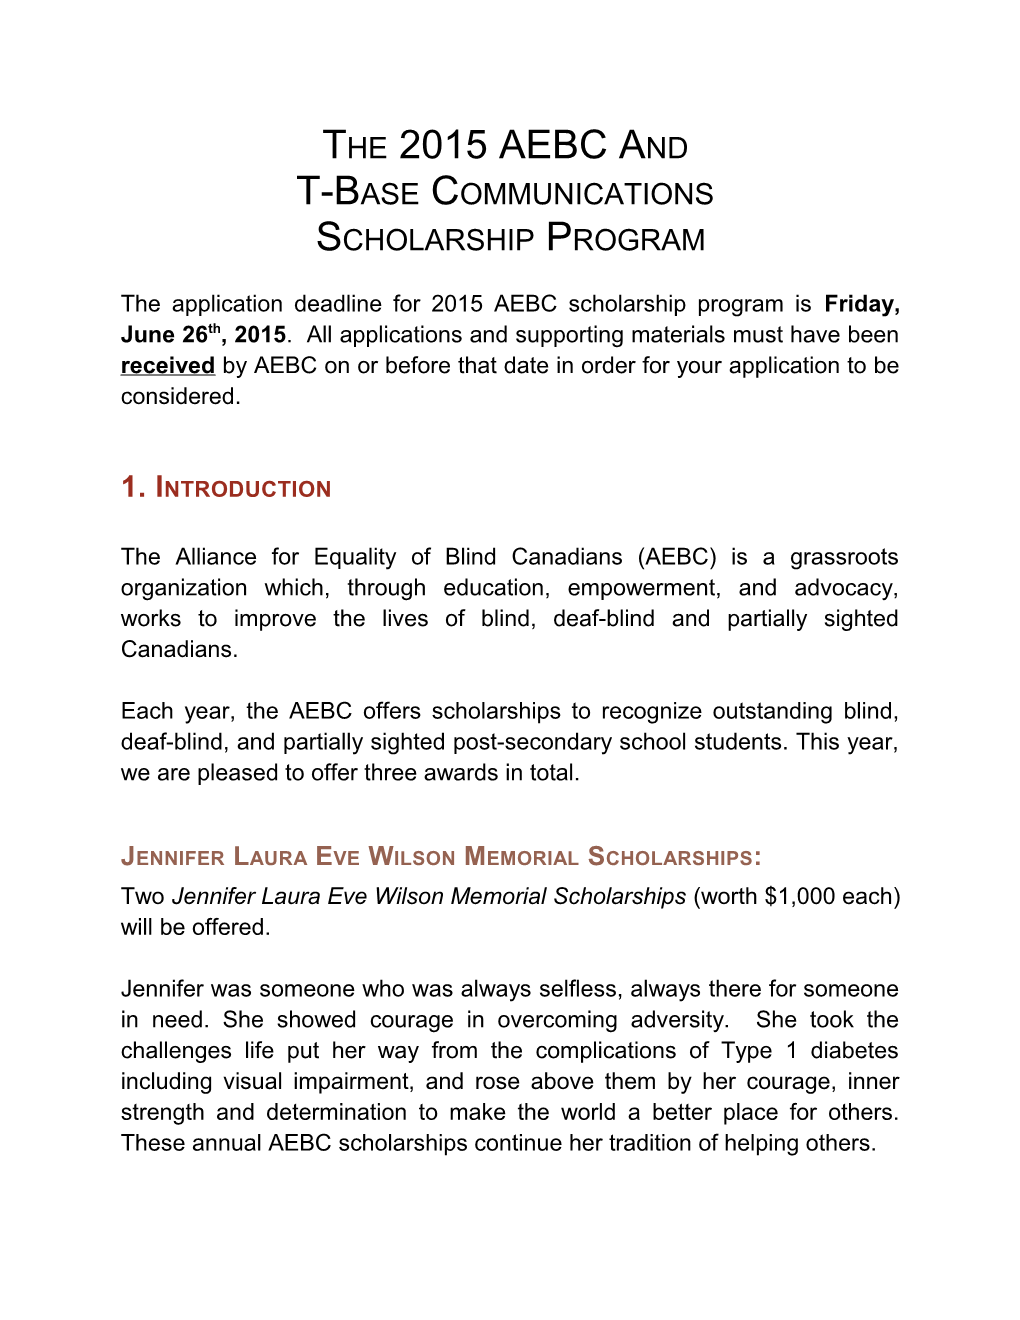 The 2015AEBC and T-Base Communications Scholarship Program